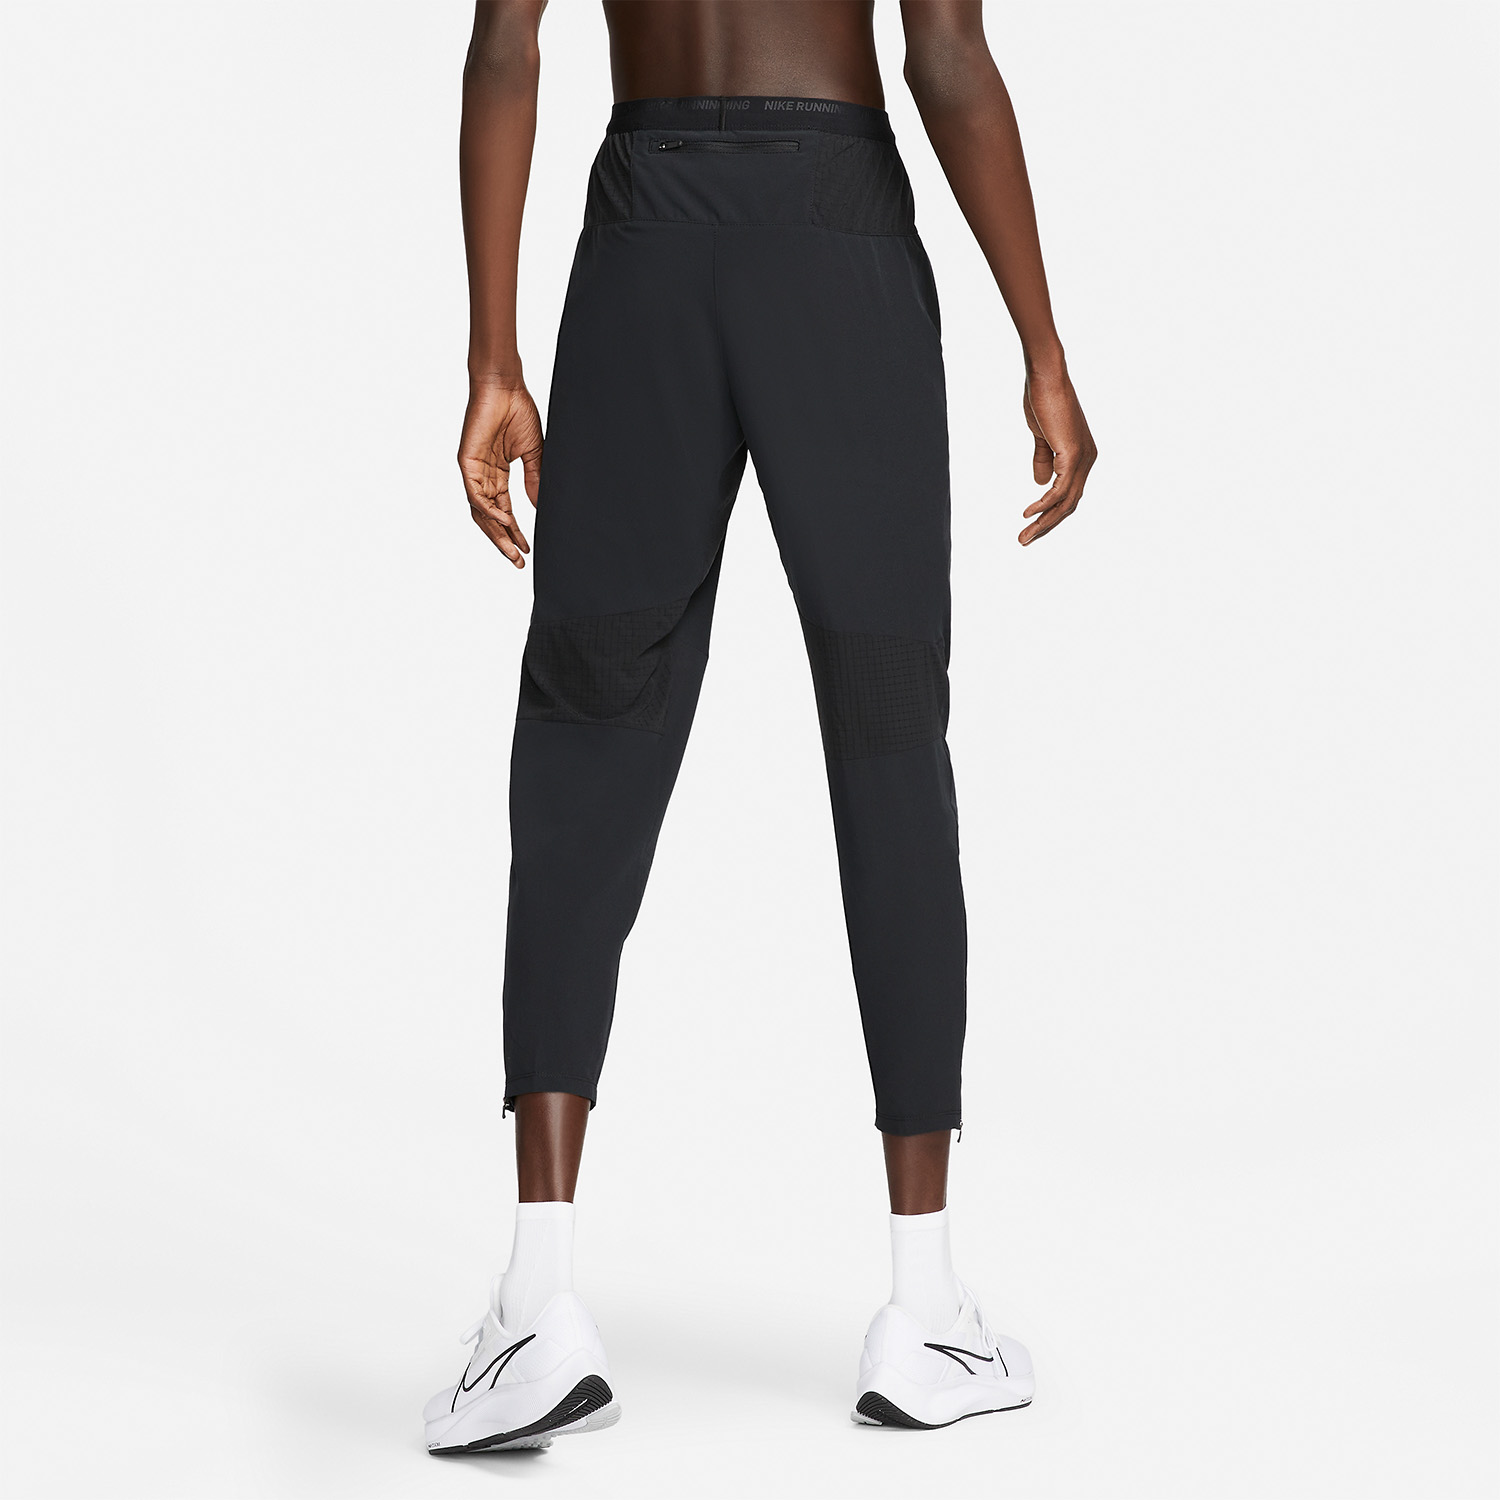 Nike Dri-FIT Phenom Elite Men's Running Pants - Black